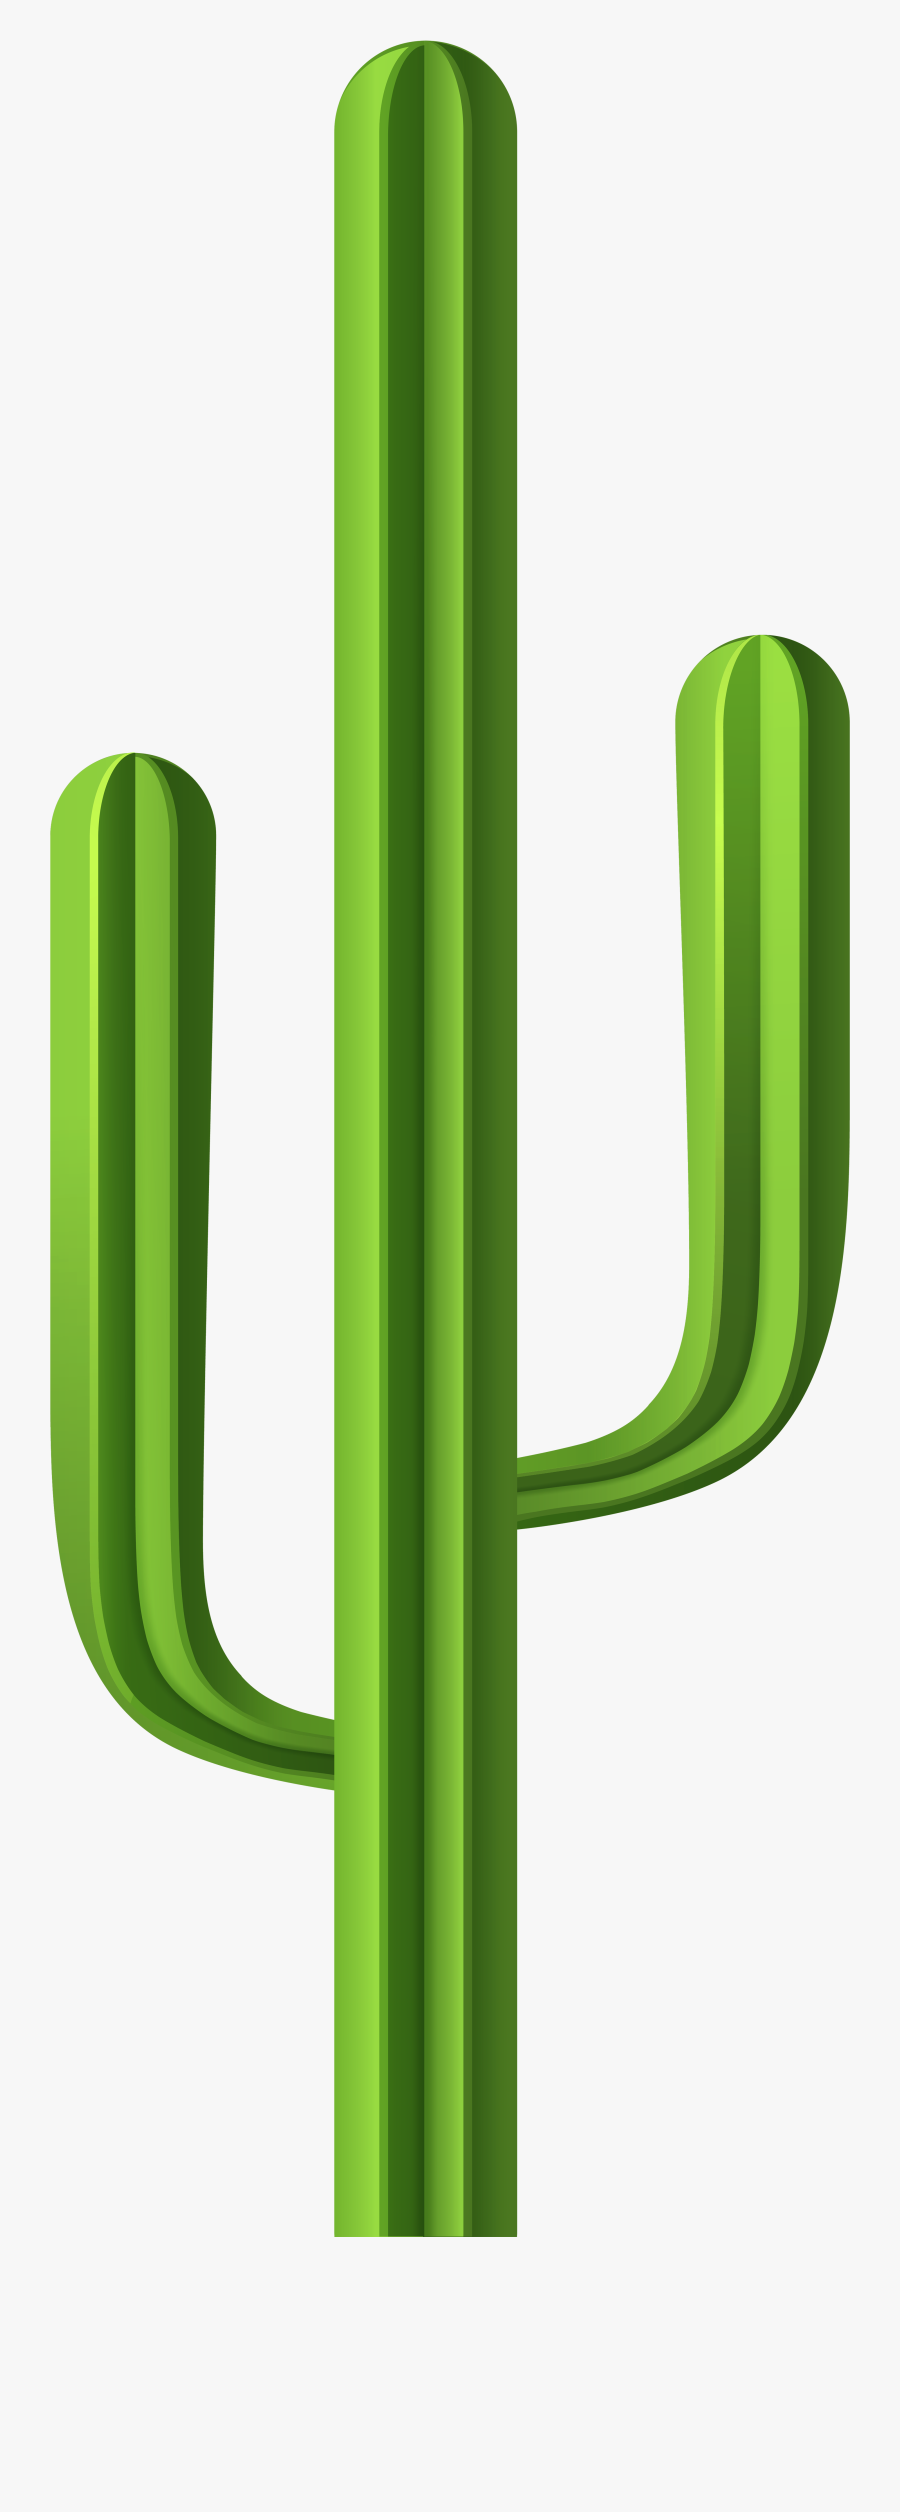 Png Clip Art Image - Cactus Clip Art Png, Transparent Clipart